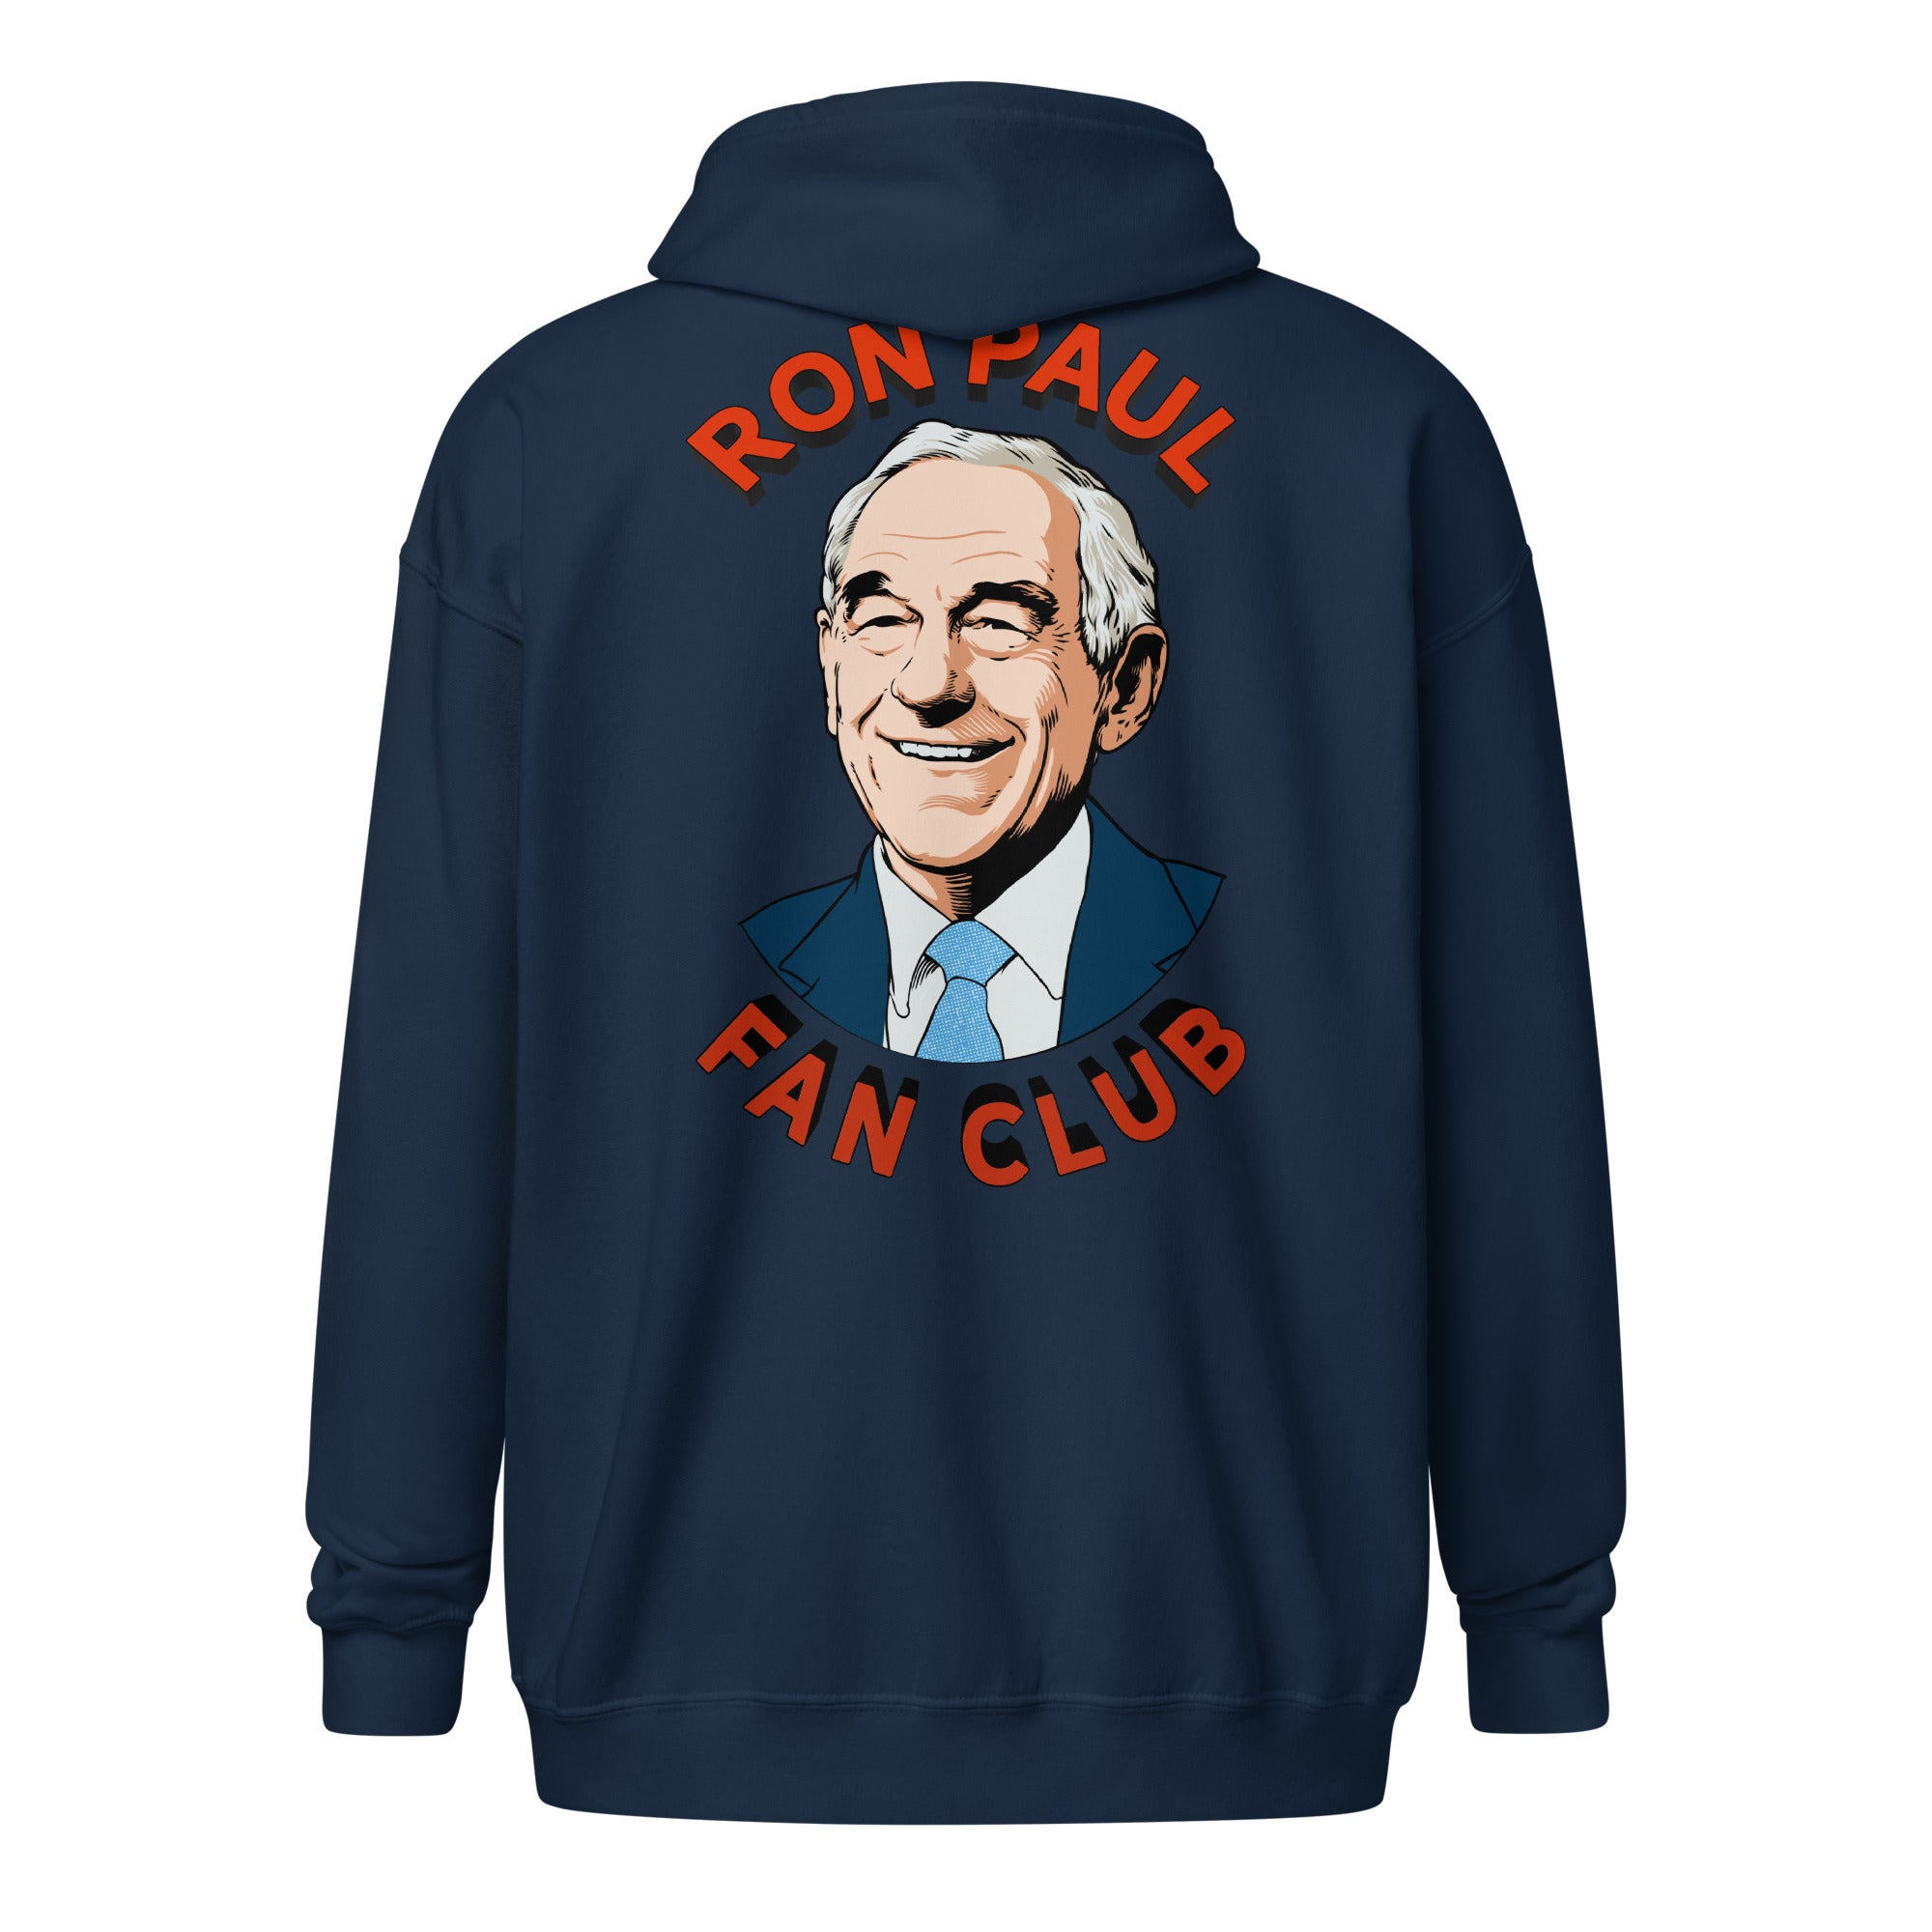 Ron Paul Fan Club Zip Hoodie